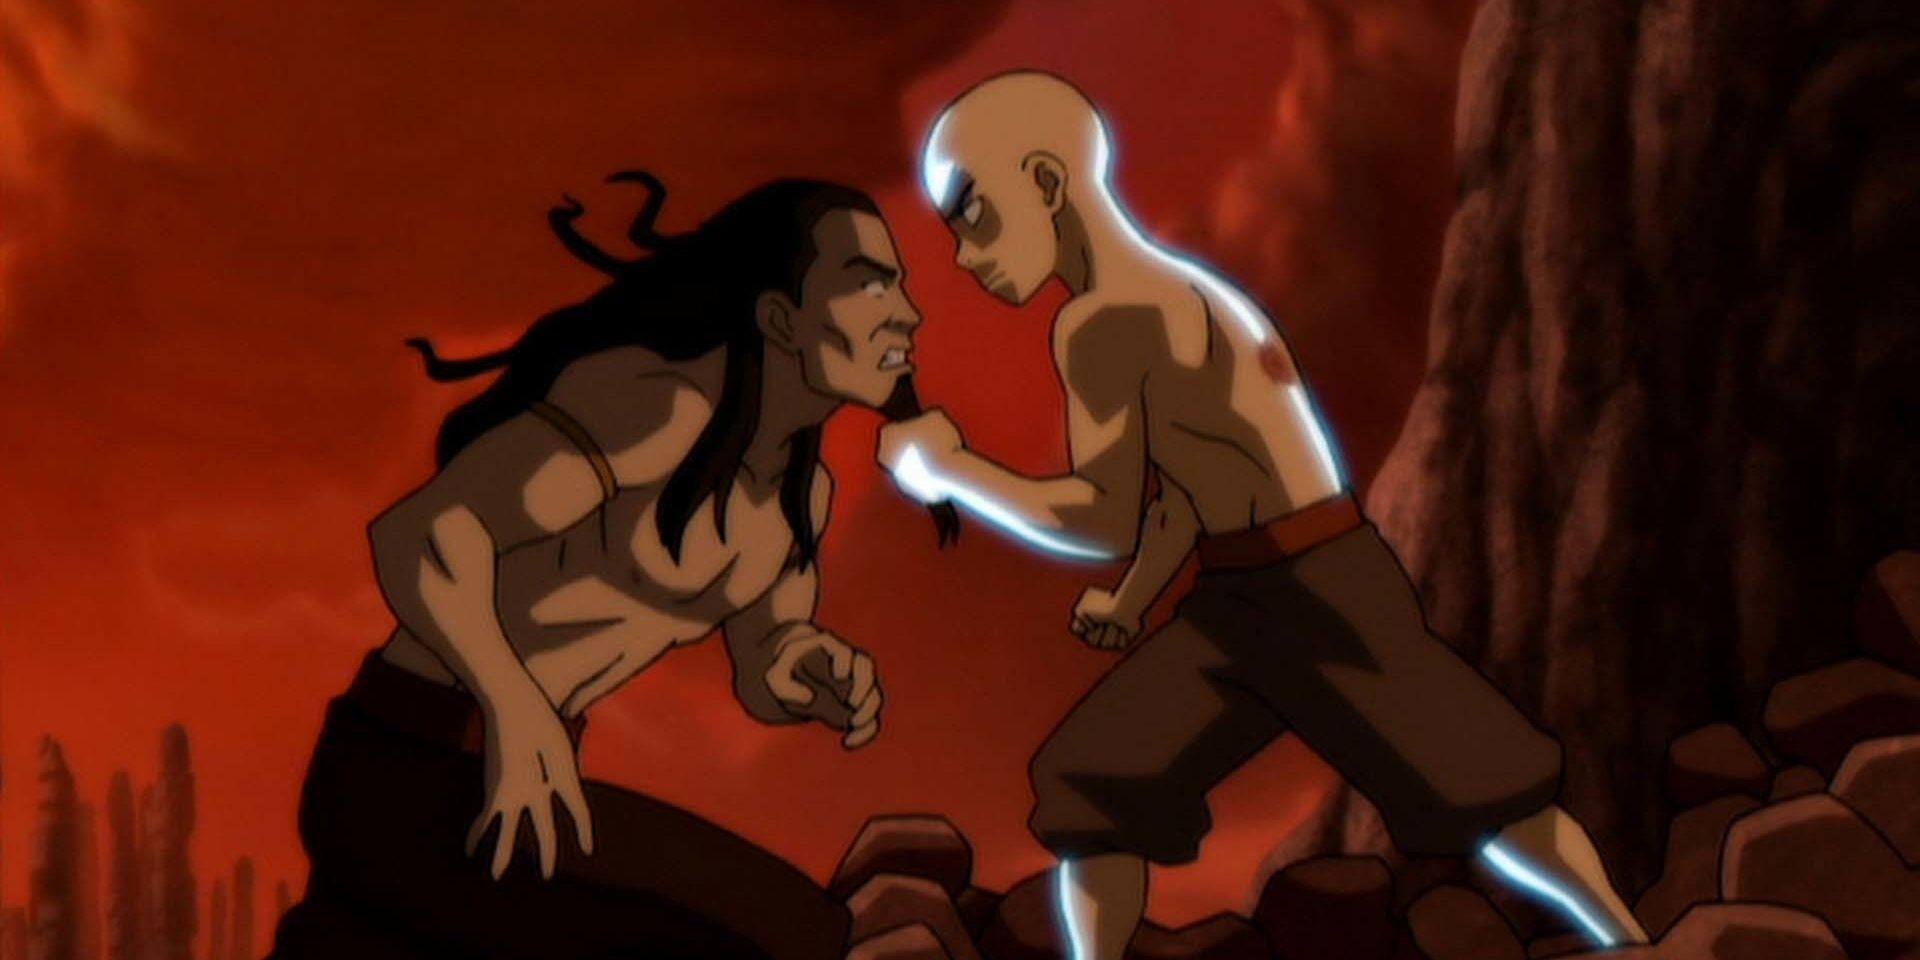 Aang fights against an enemy in ATLA